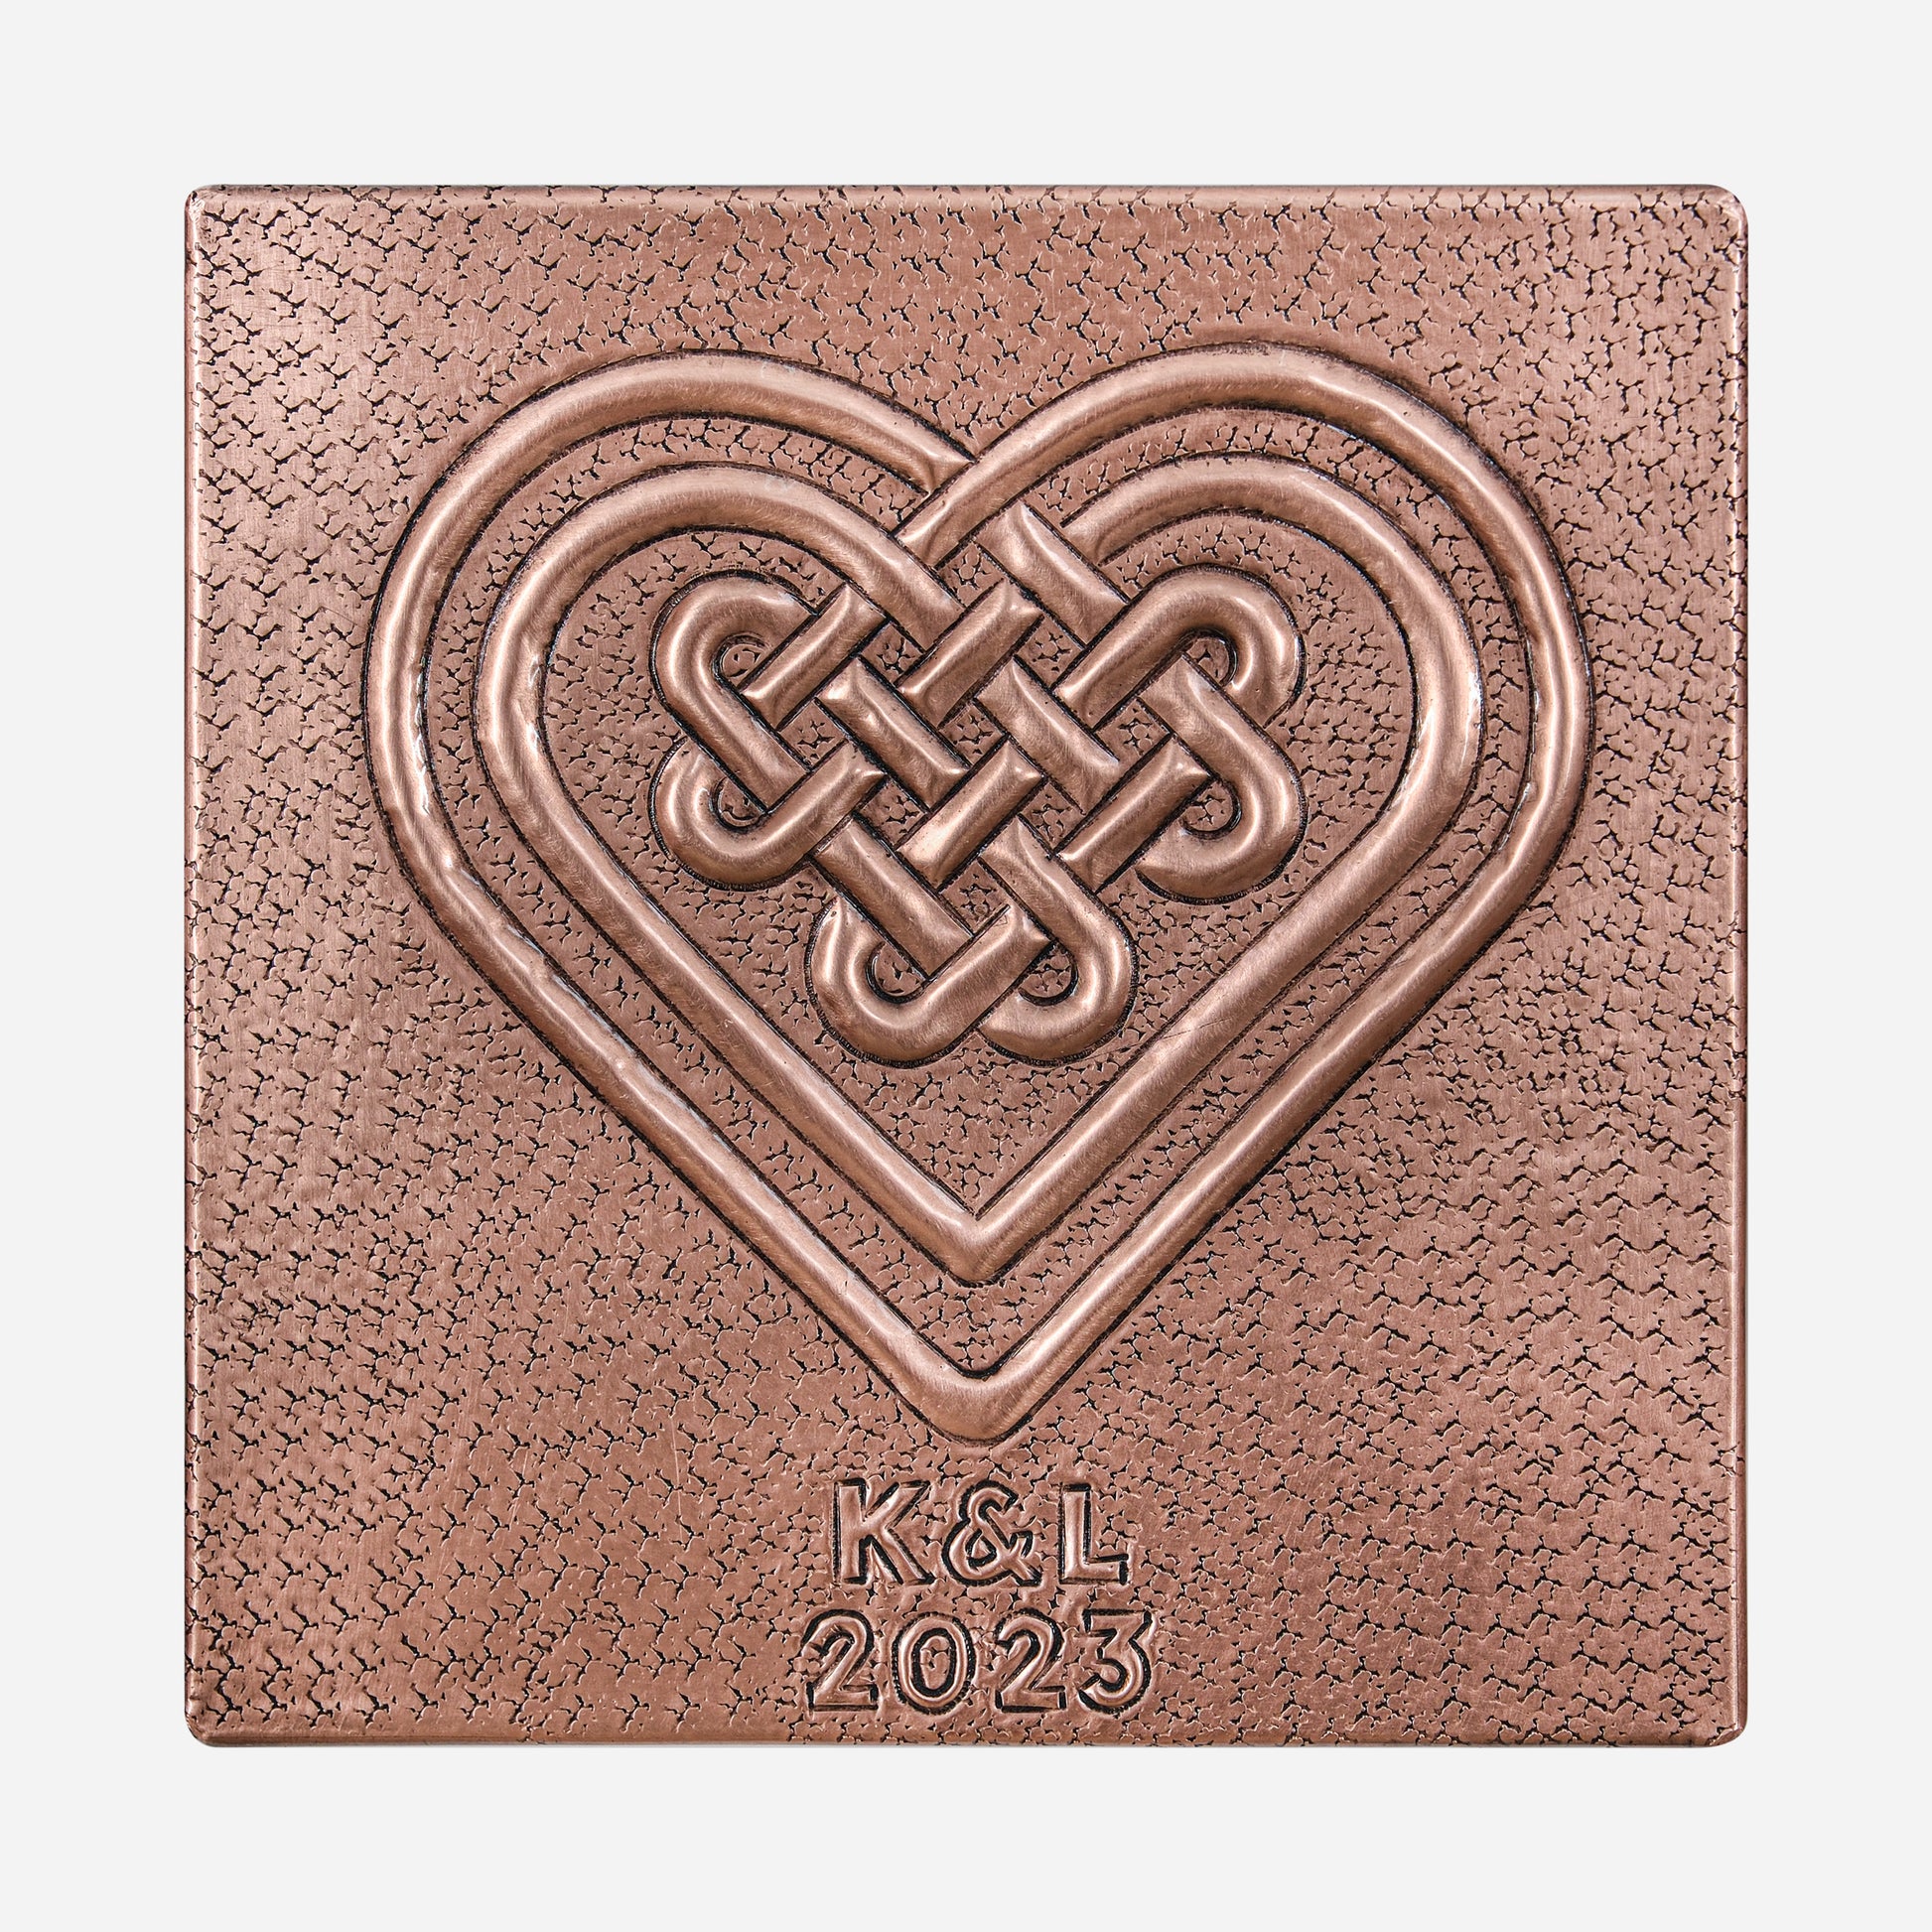 Copper Backsplash Panel (Celtic Heart Love Knot)